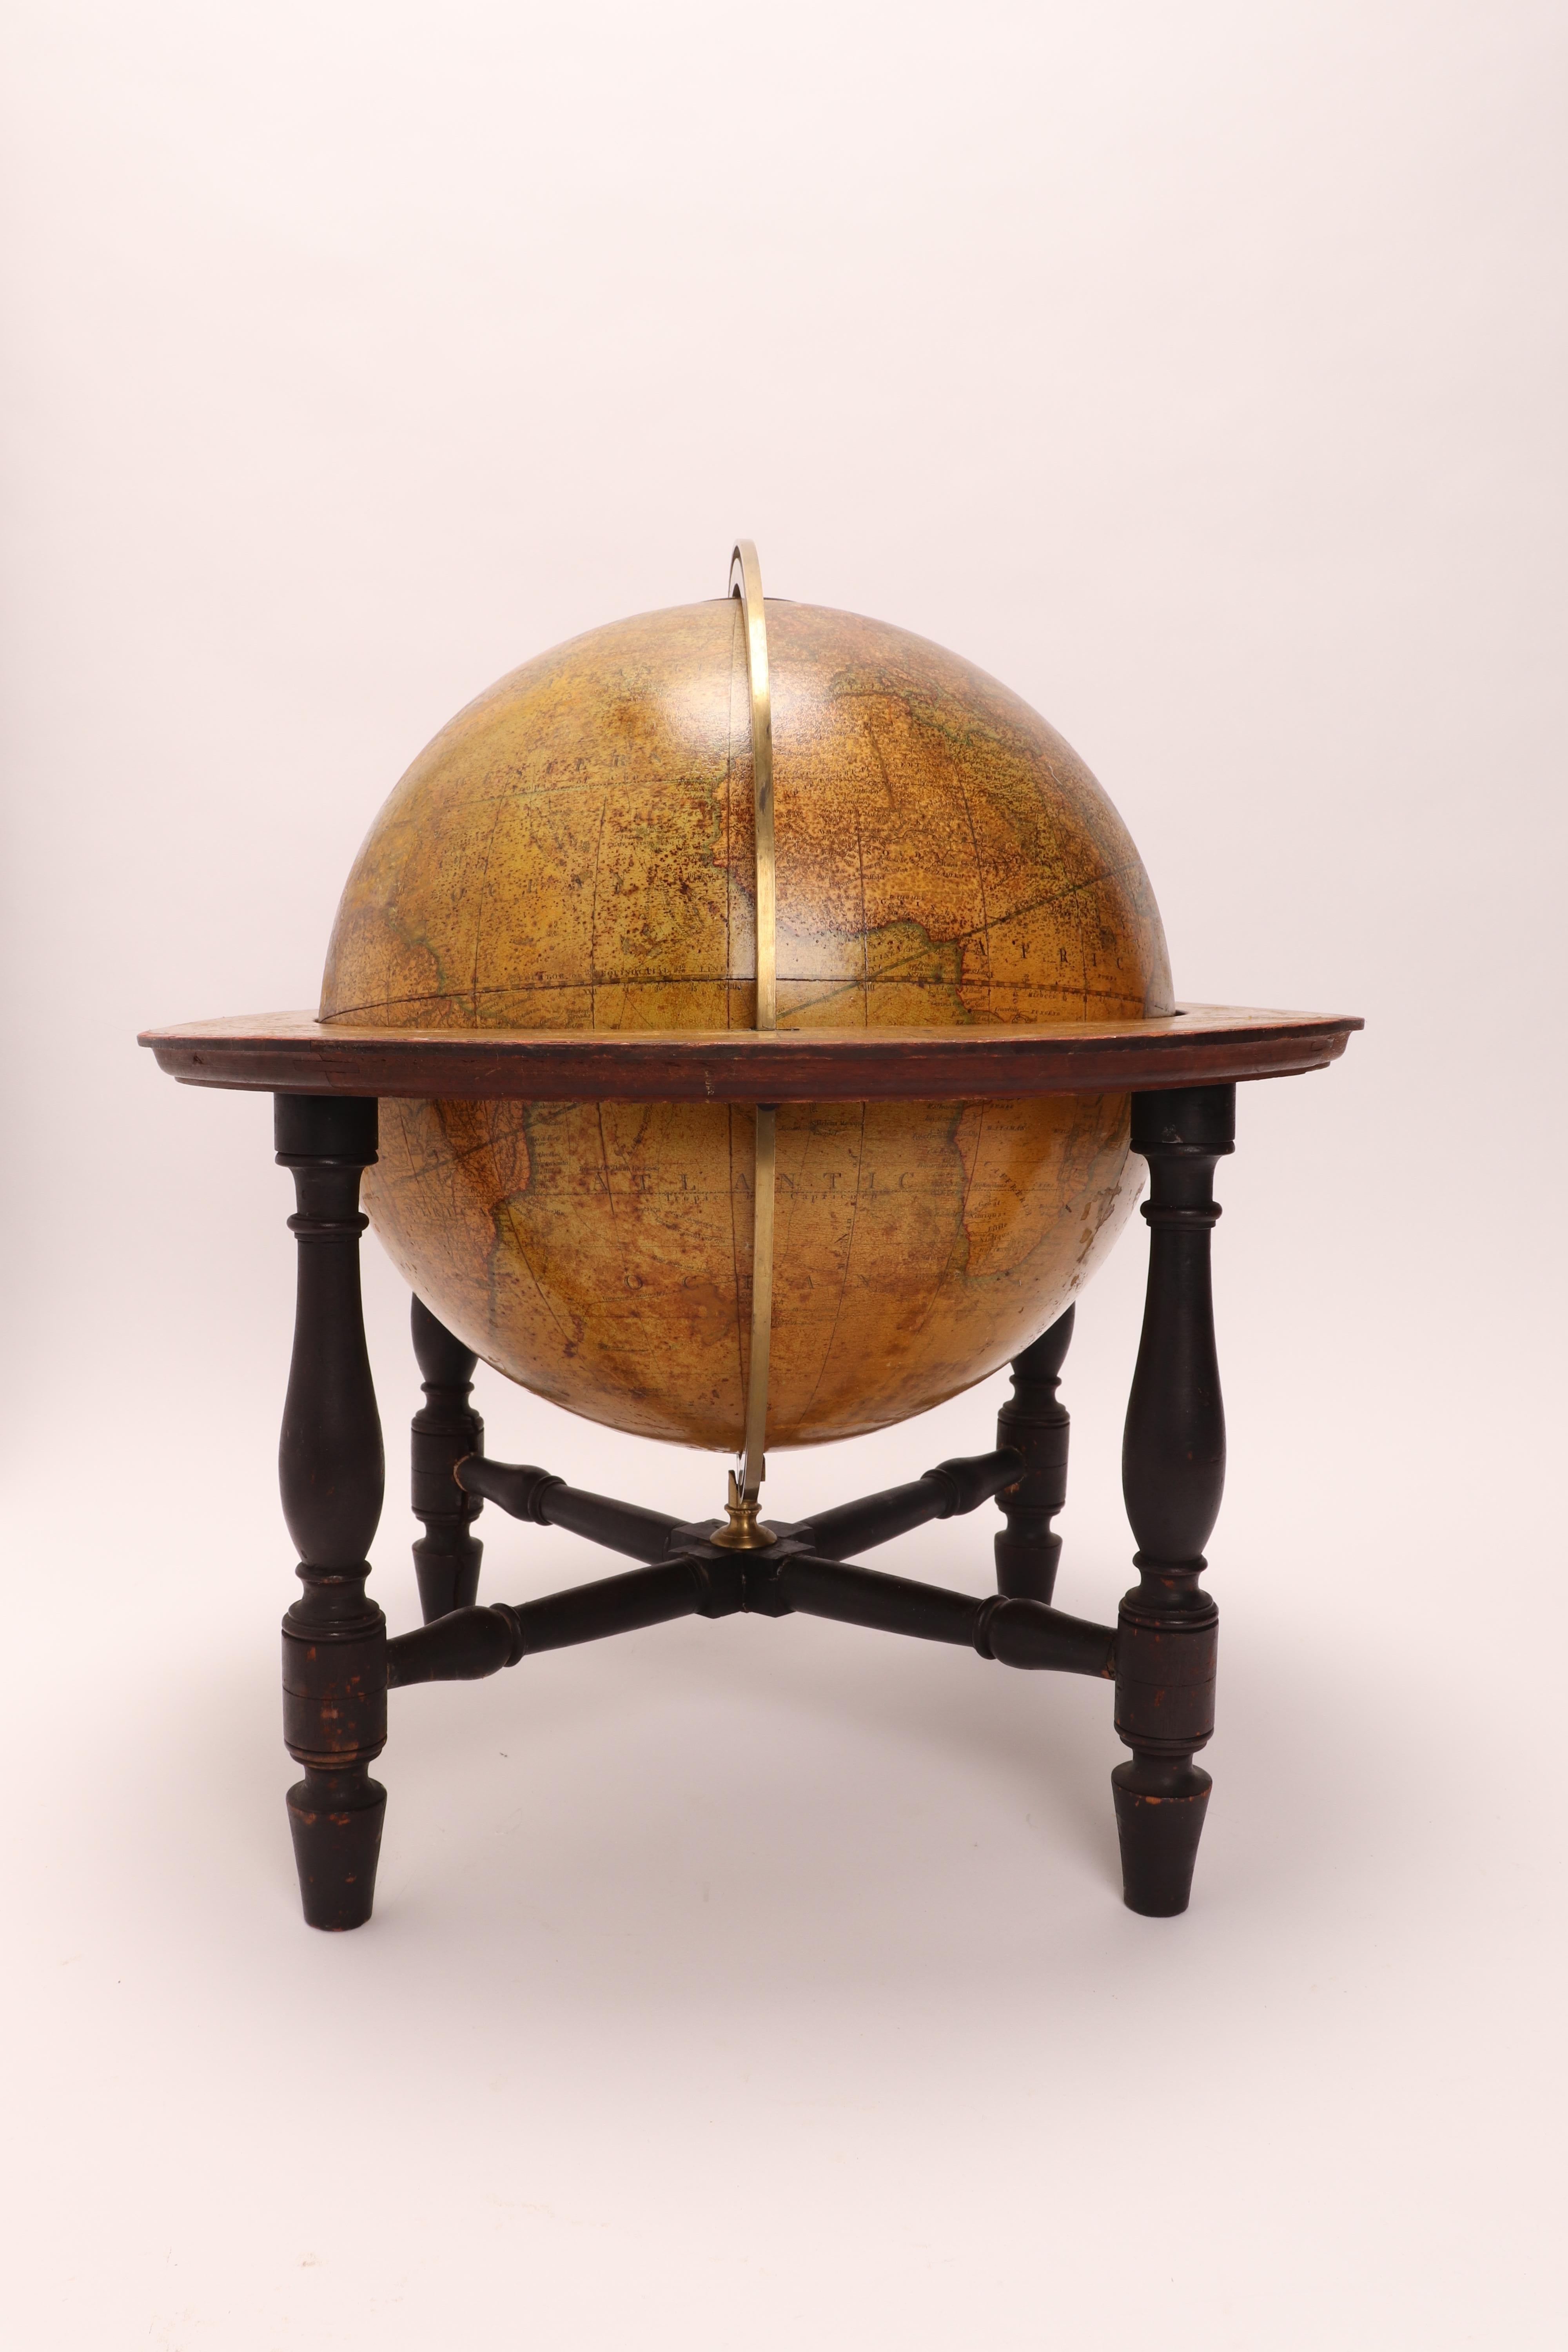 British Terrestrial Globe Signed Cary, London, 1800